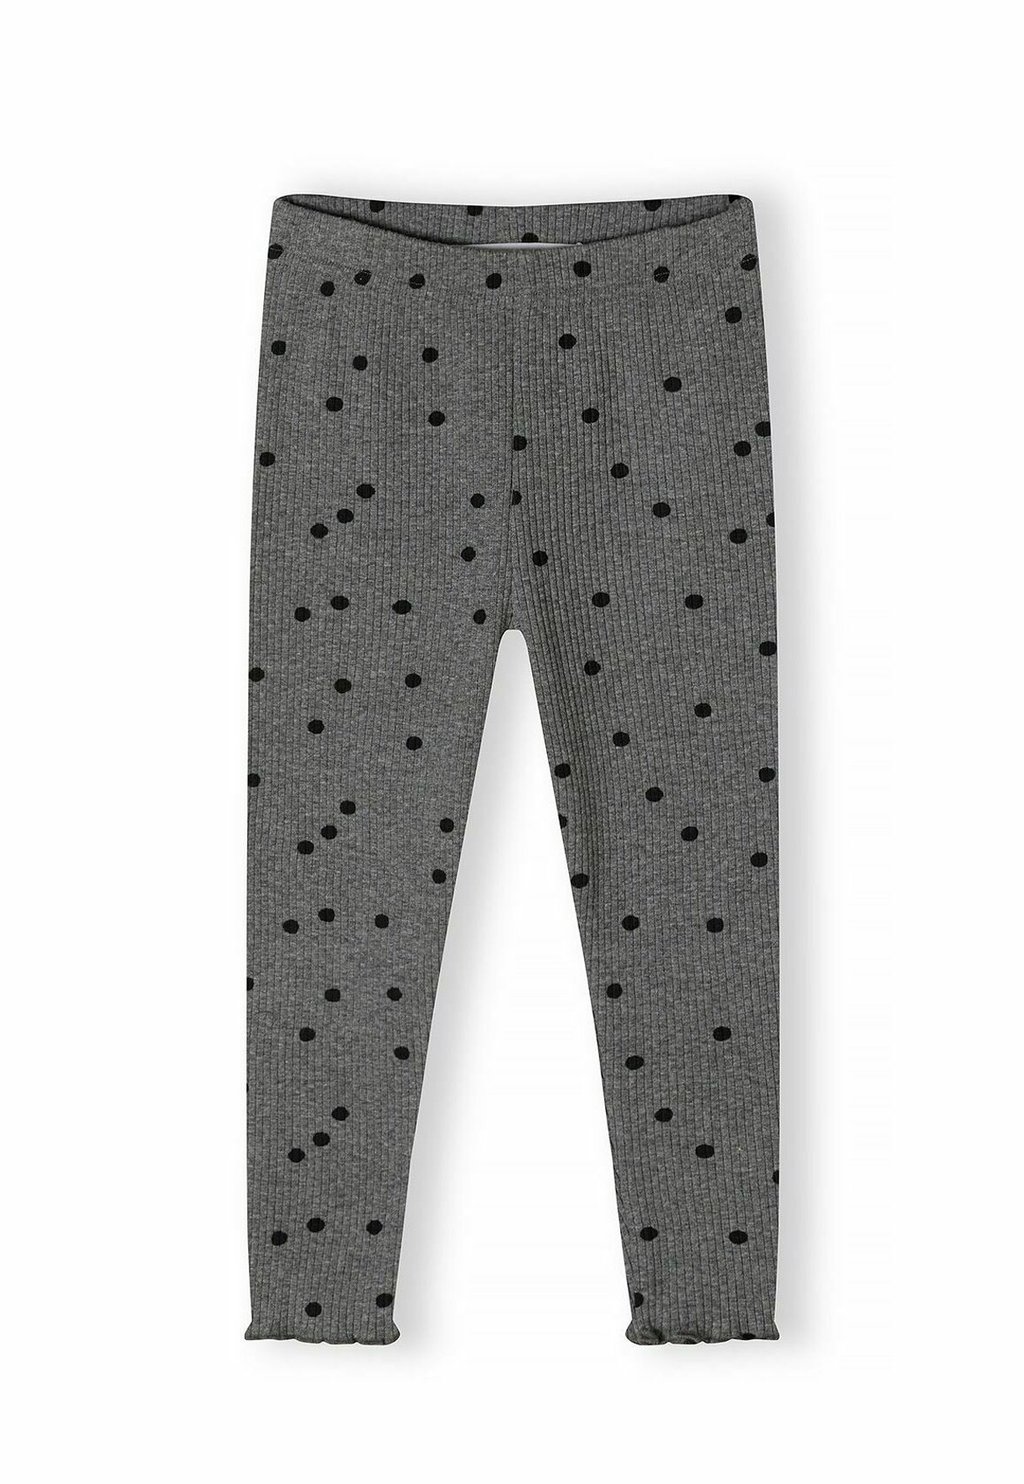 Леггинсы STANDARD MINOTI, цвет mottled dark grey black пижама standard minoti цвет dark grey